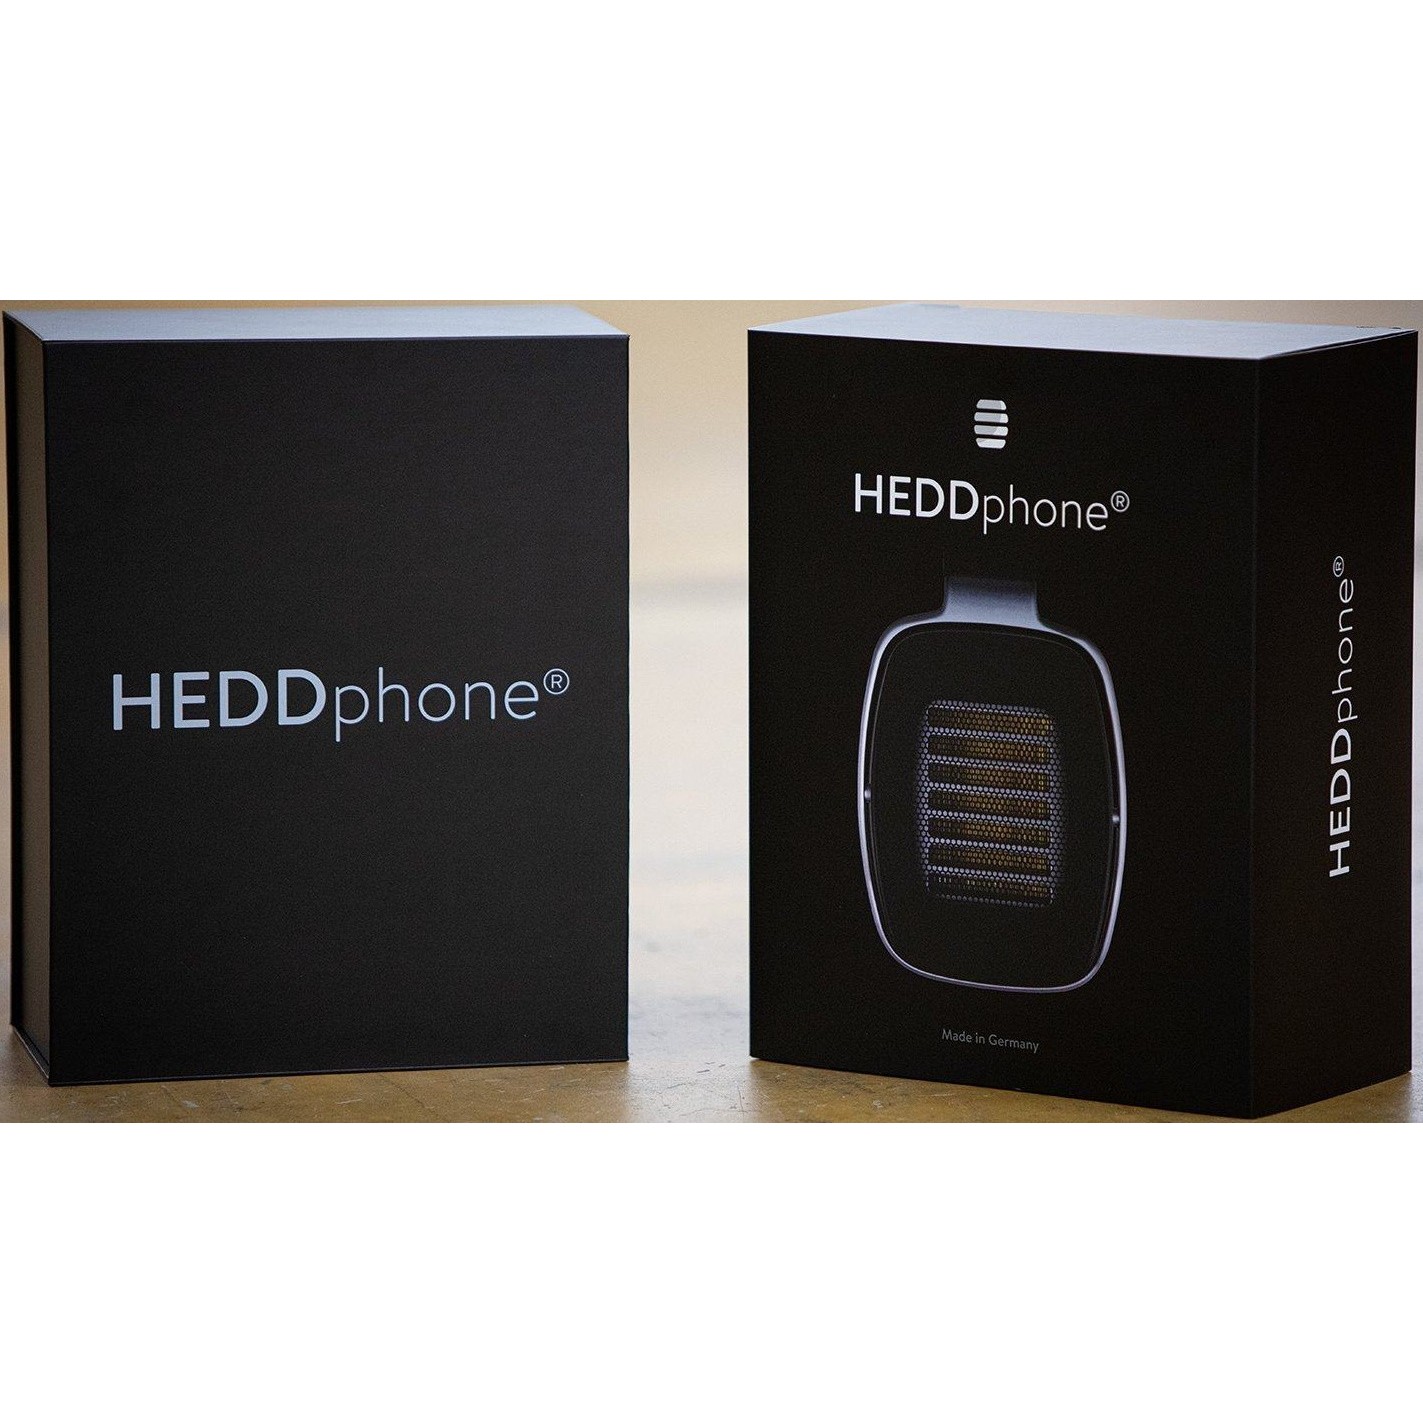 Hedd heddphone one АЧХ. Hedd Audio фирма что производит. Наушники Hedd heddphone, Black. Наушники Hedd heddphone.